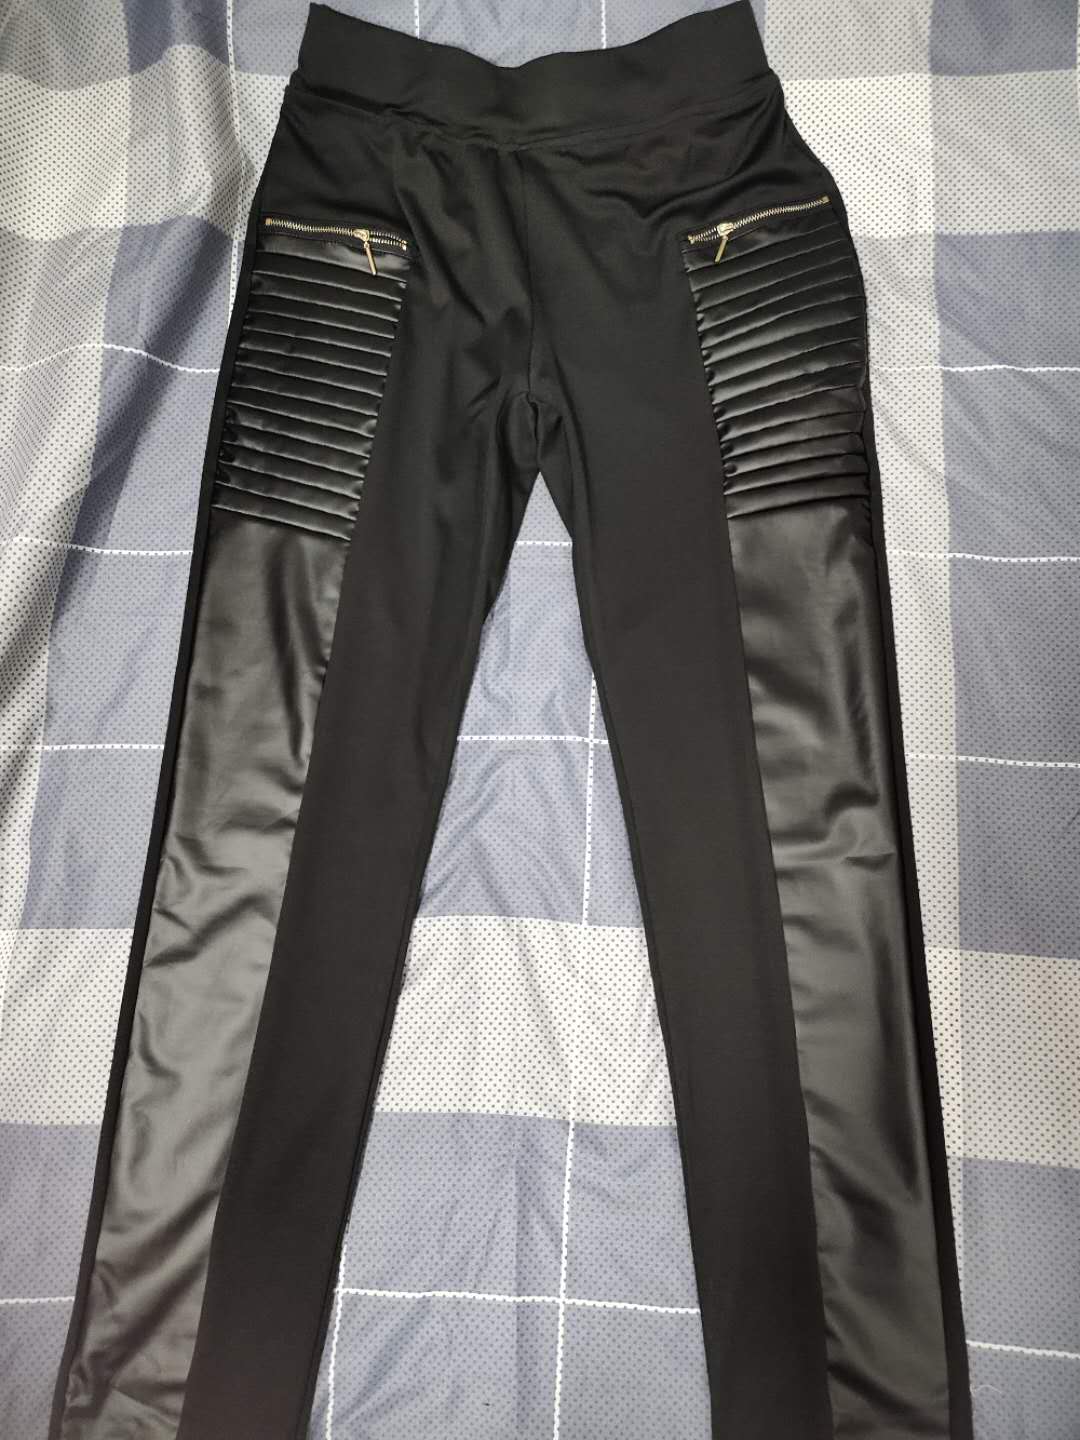 PU Leather Contrast Zipper Design High Waist Skinny Pants